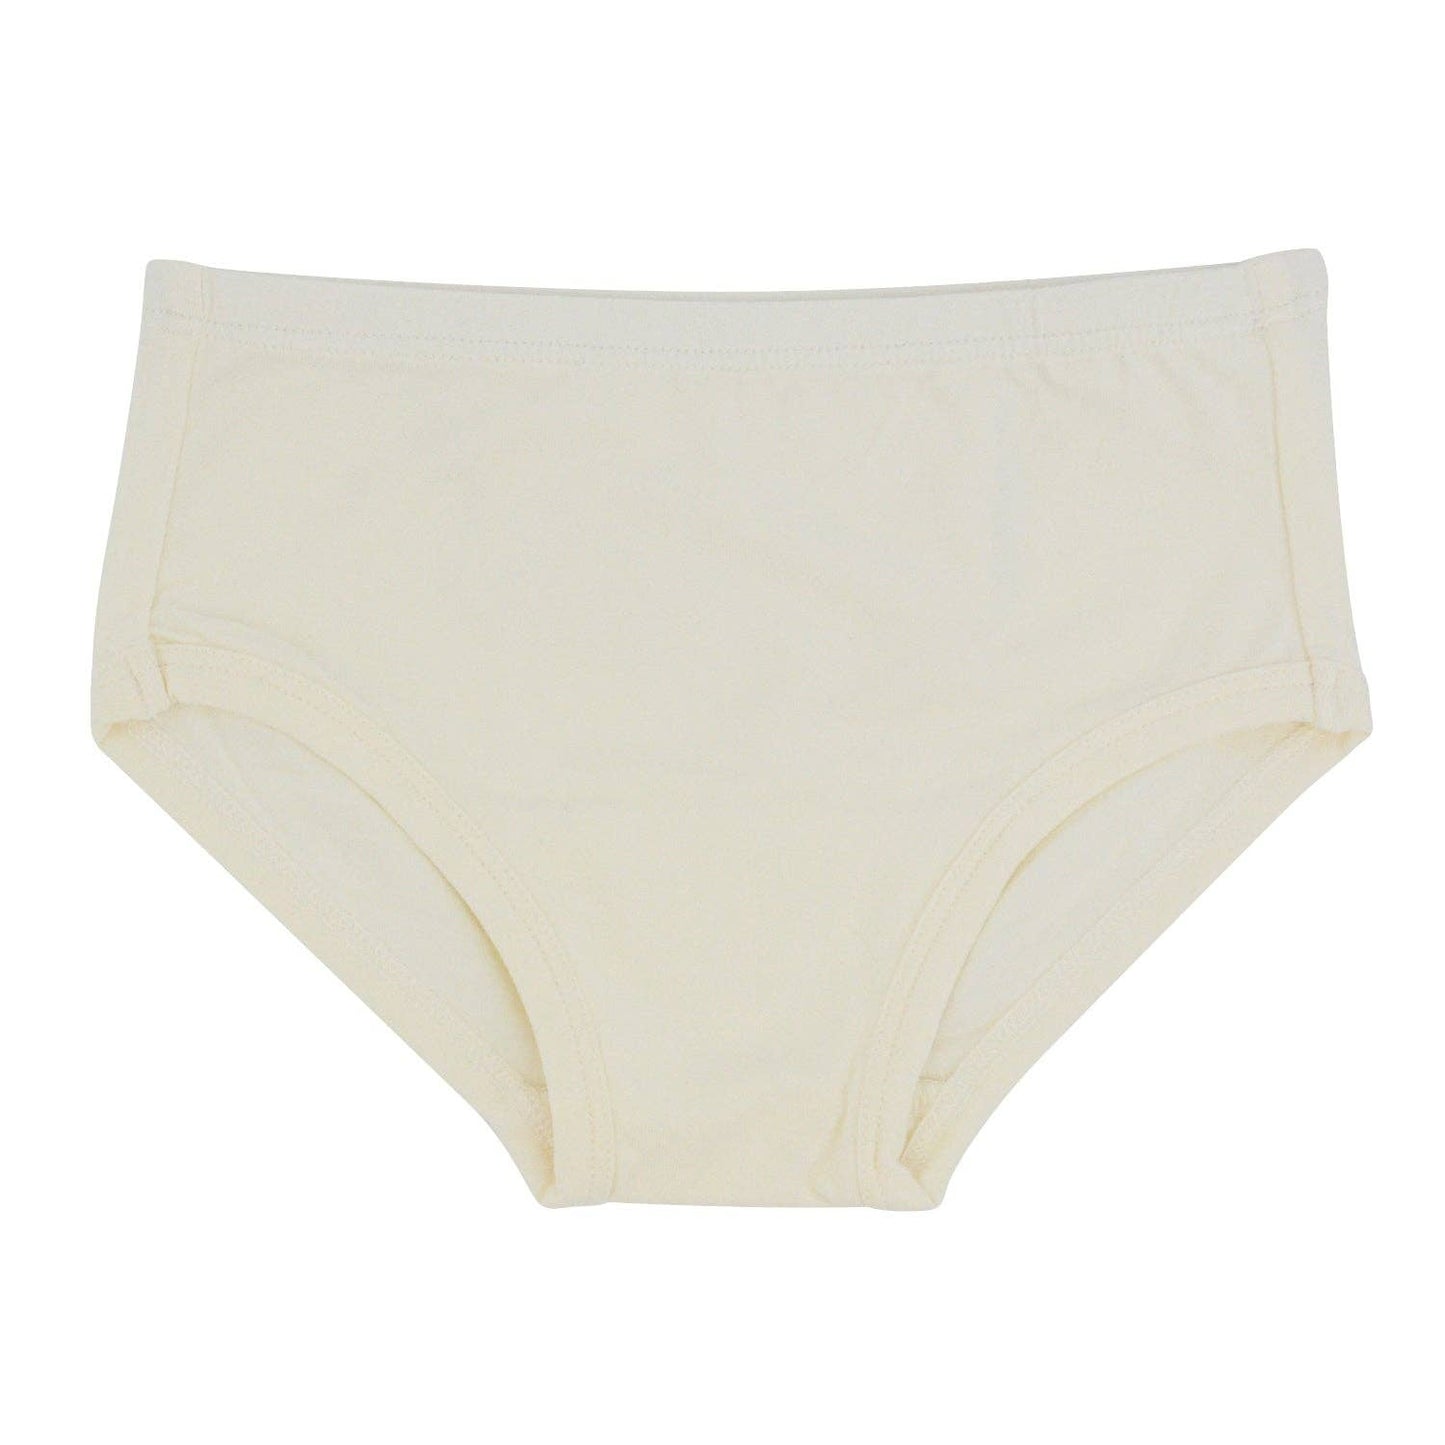 Girl's Underwear - Whispery White